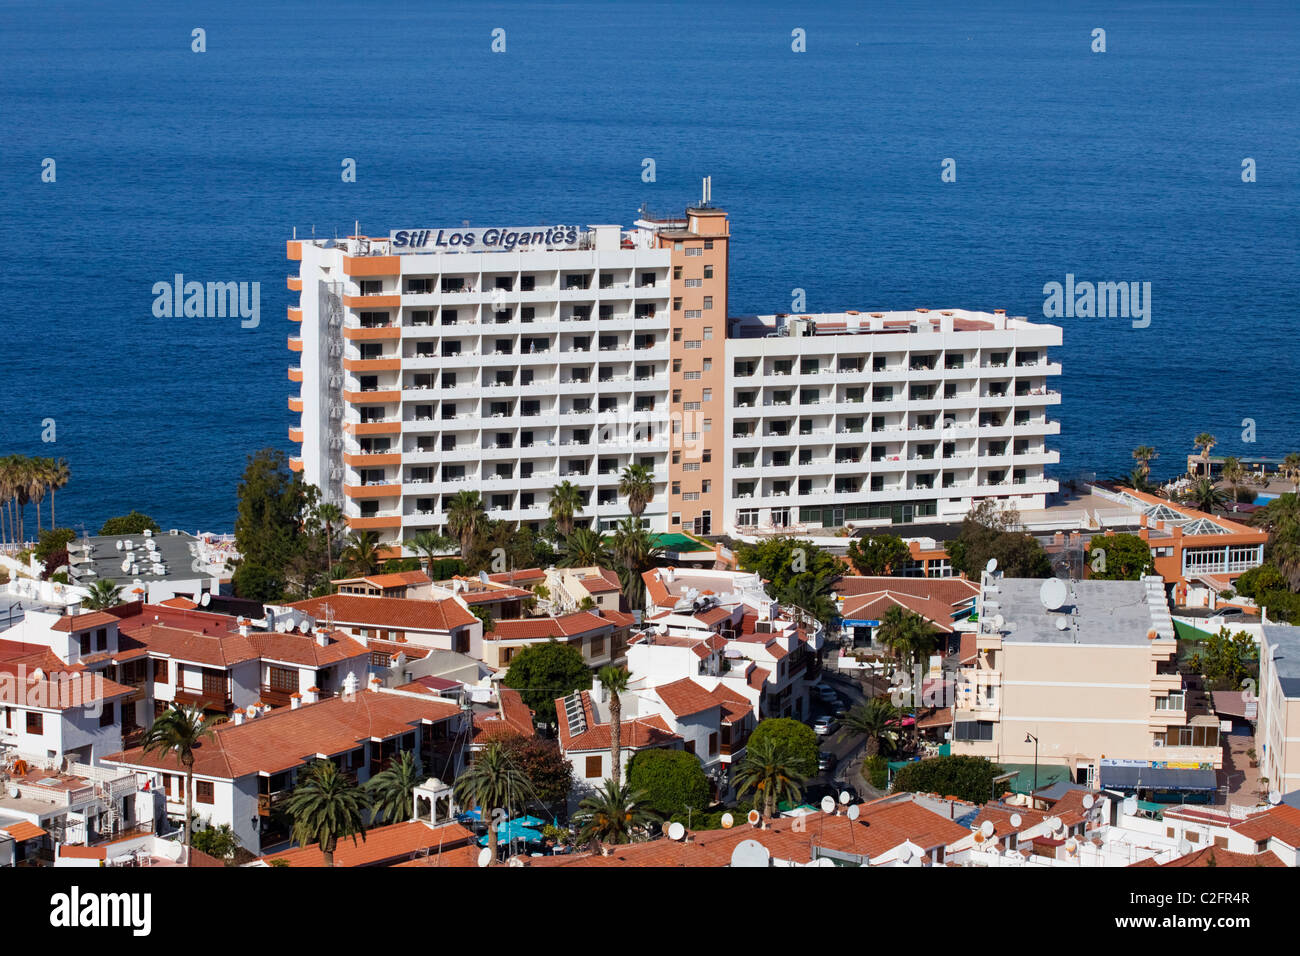 The hotel Stil, Los Gigantes, Tenerife Stock Photo